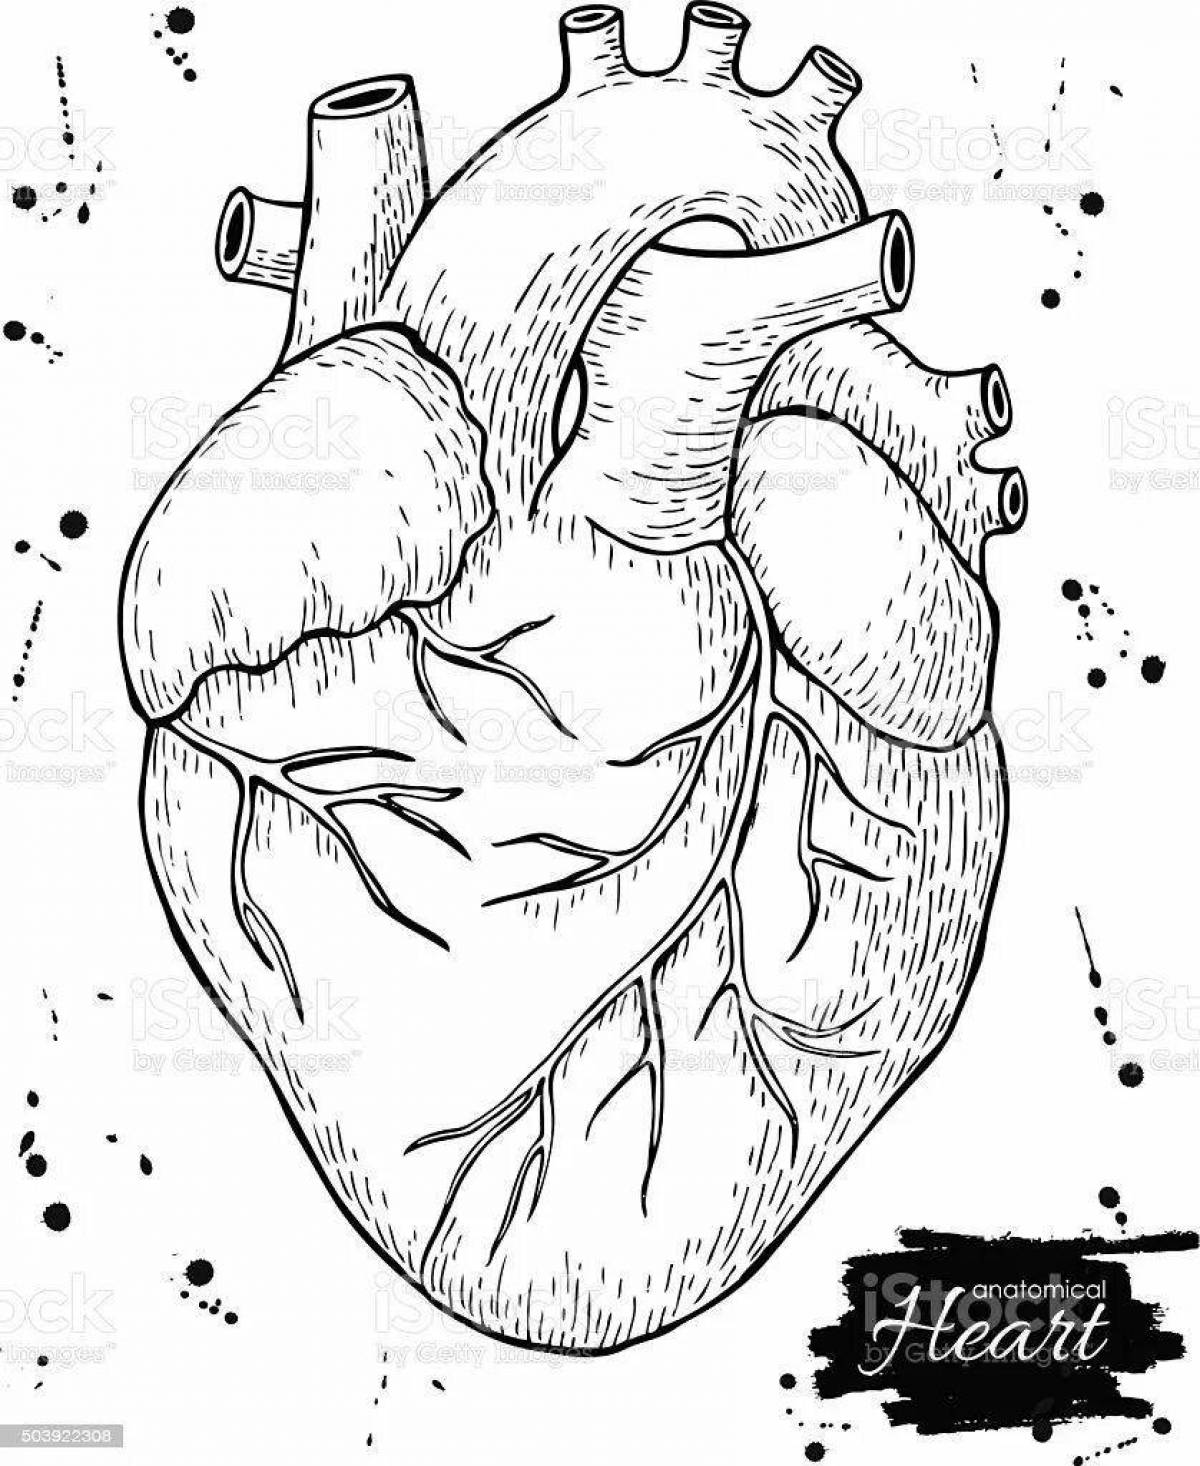 Фото Блестящая страница раскраски анатомии сердца